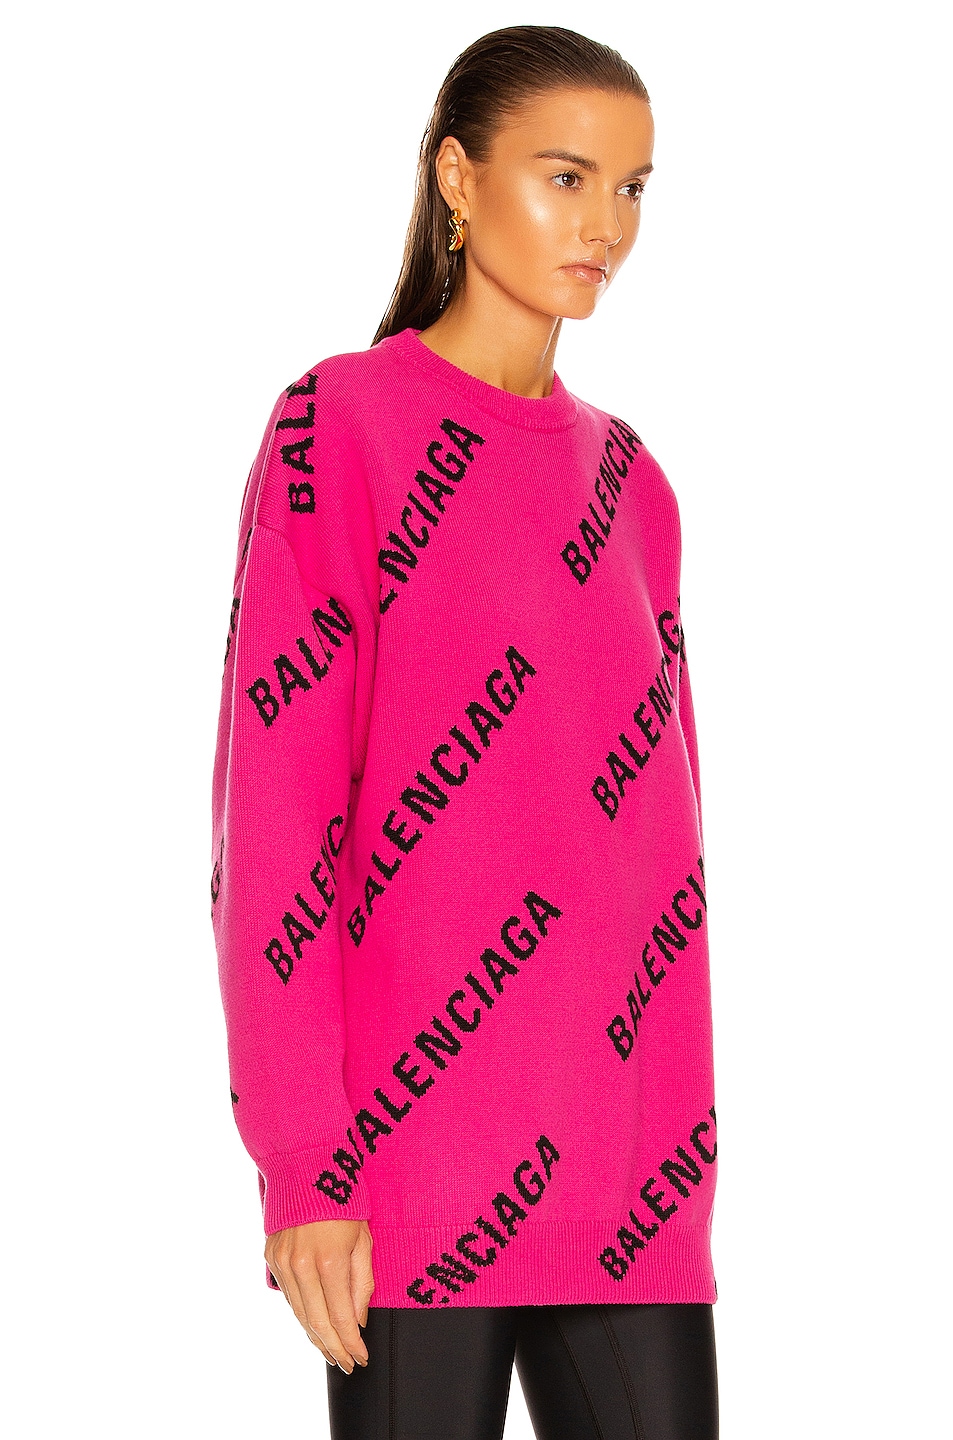 Balenciaga Long Sleeve Crewneck Sweater in Pink & Black | FWRD